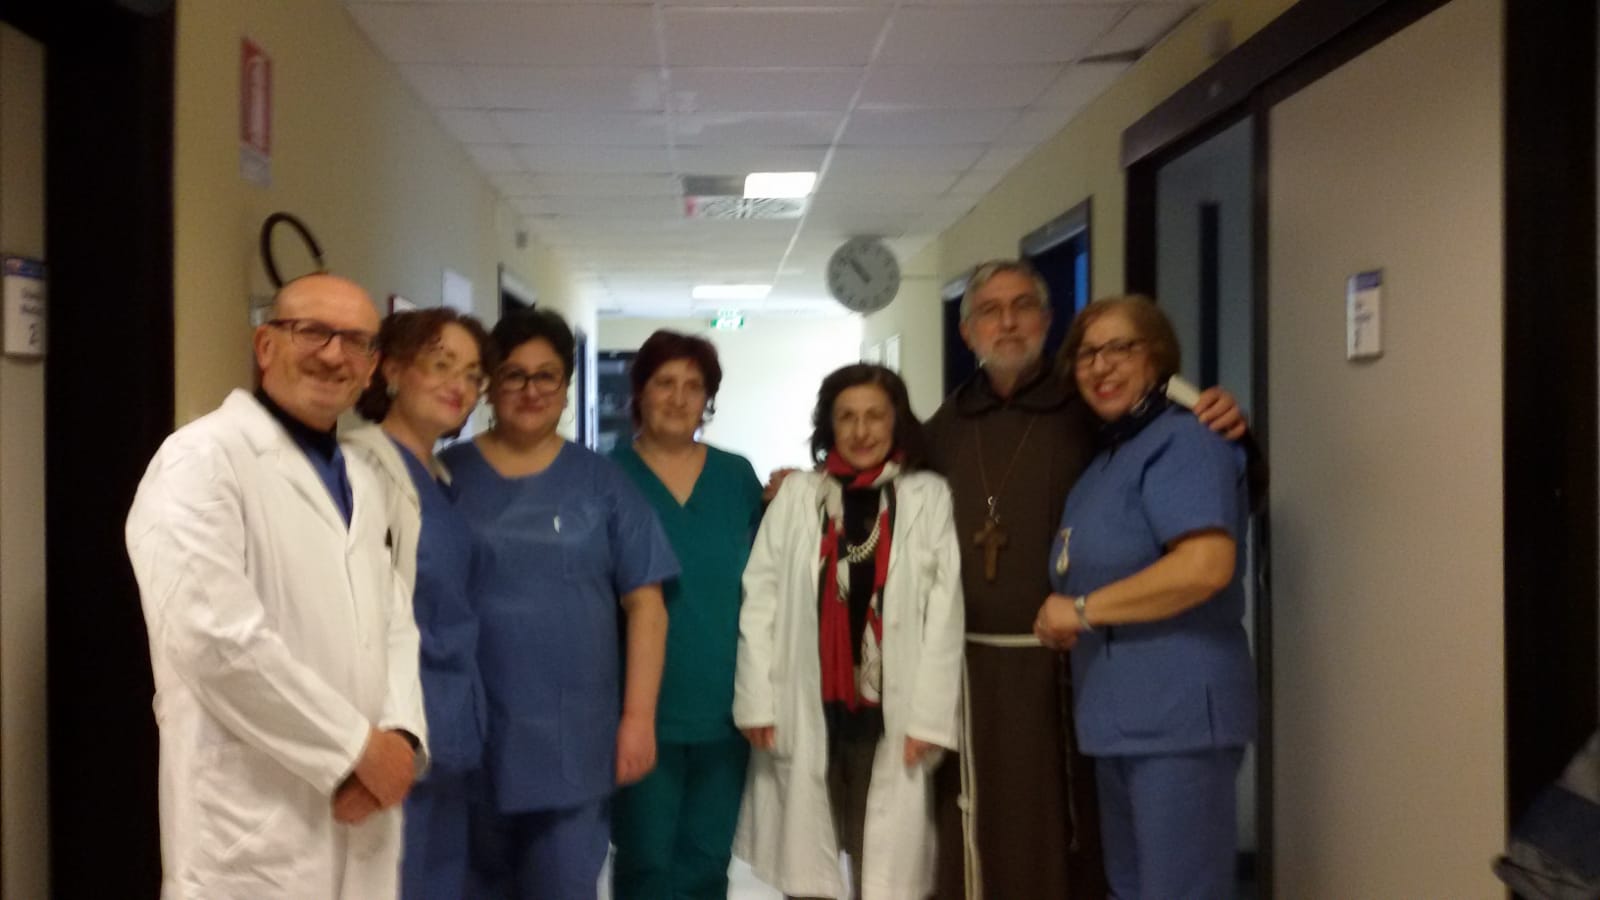 ASP Catania - caltagirone. visita vescovo ospedale - 11.02.2020 -2